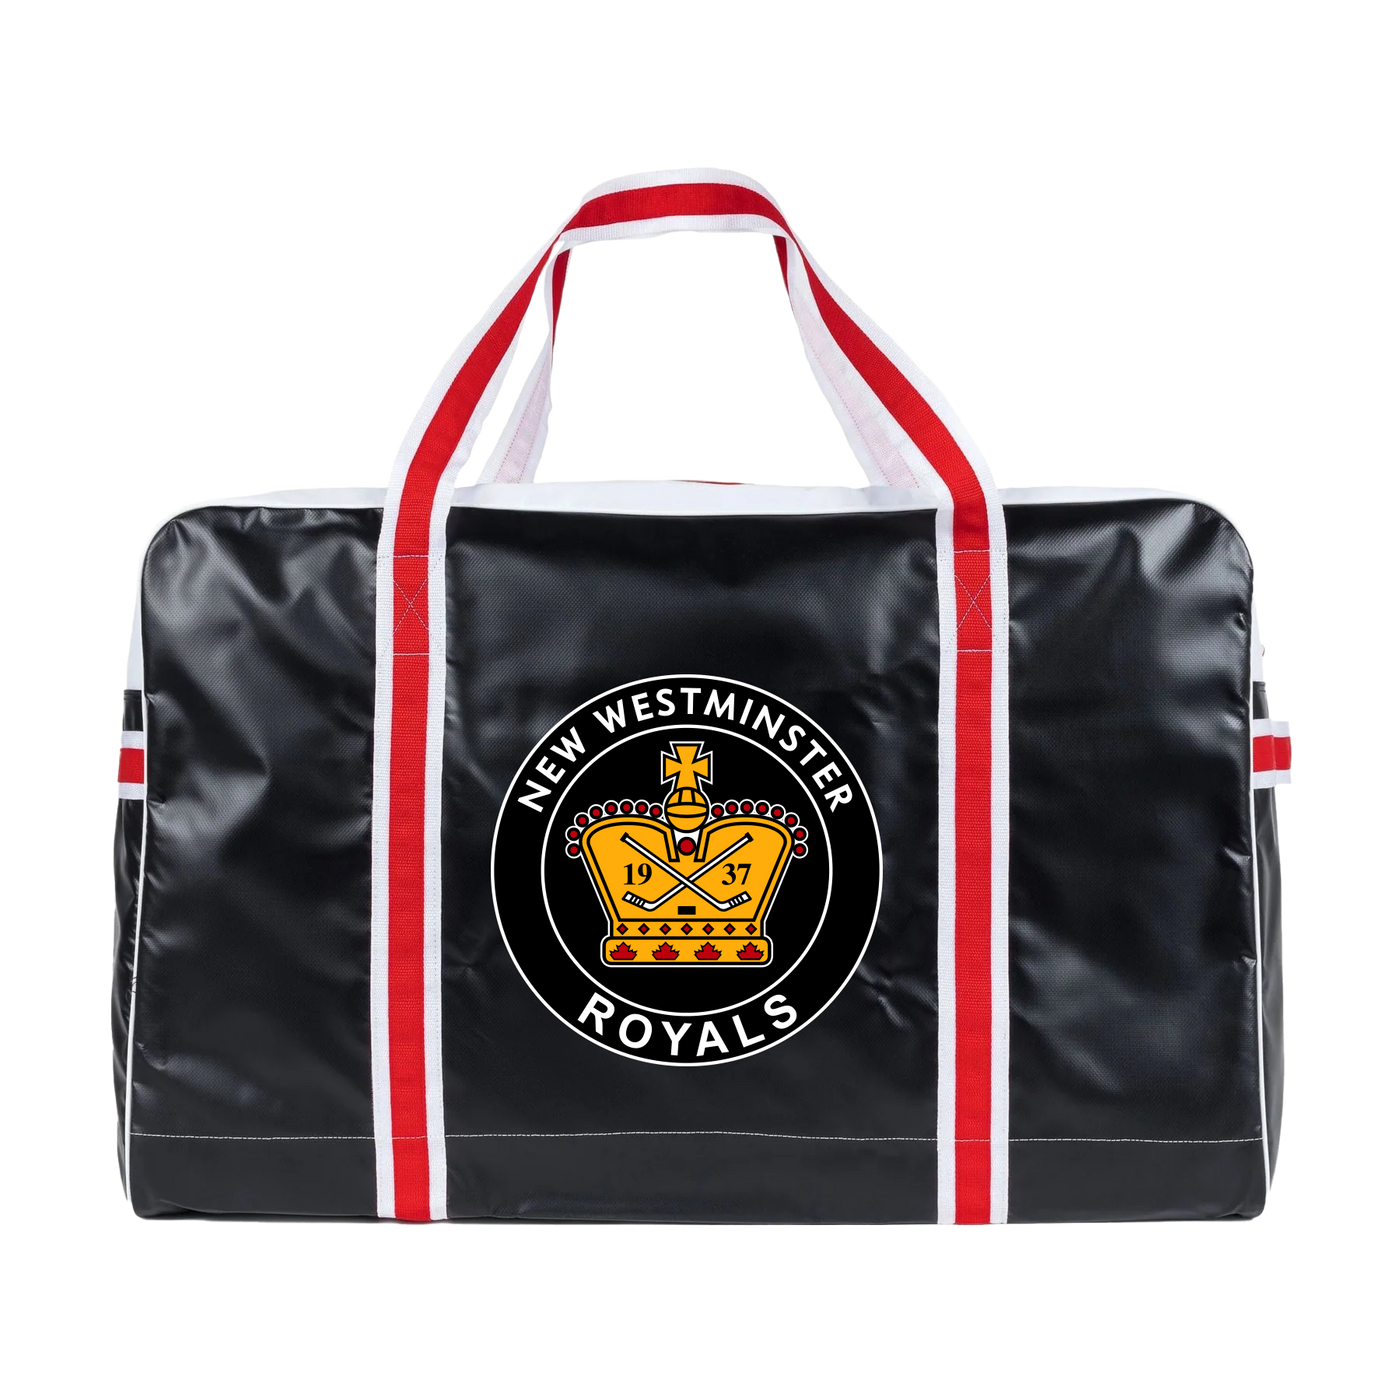 New West Royals -- Warrior Intermediate Hockey Bag